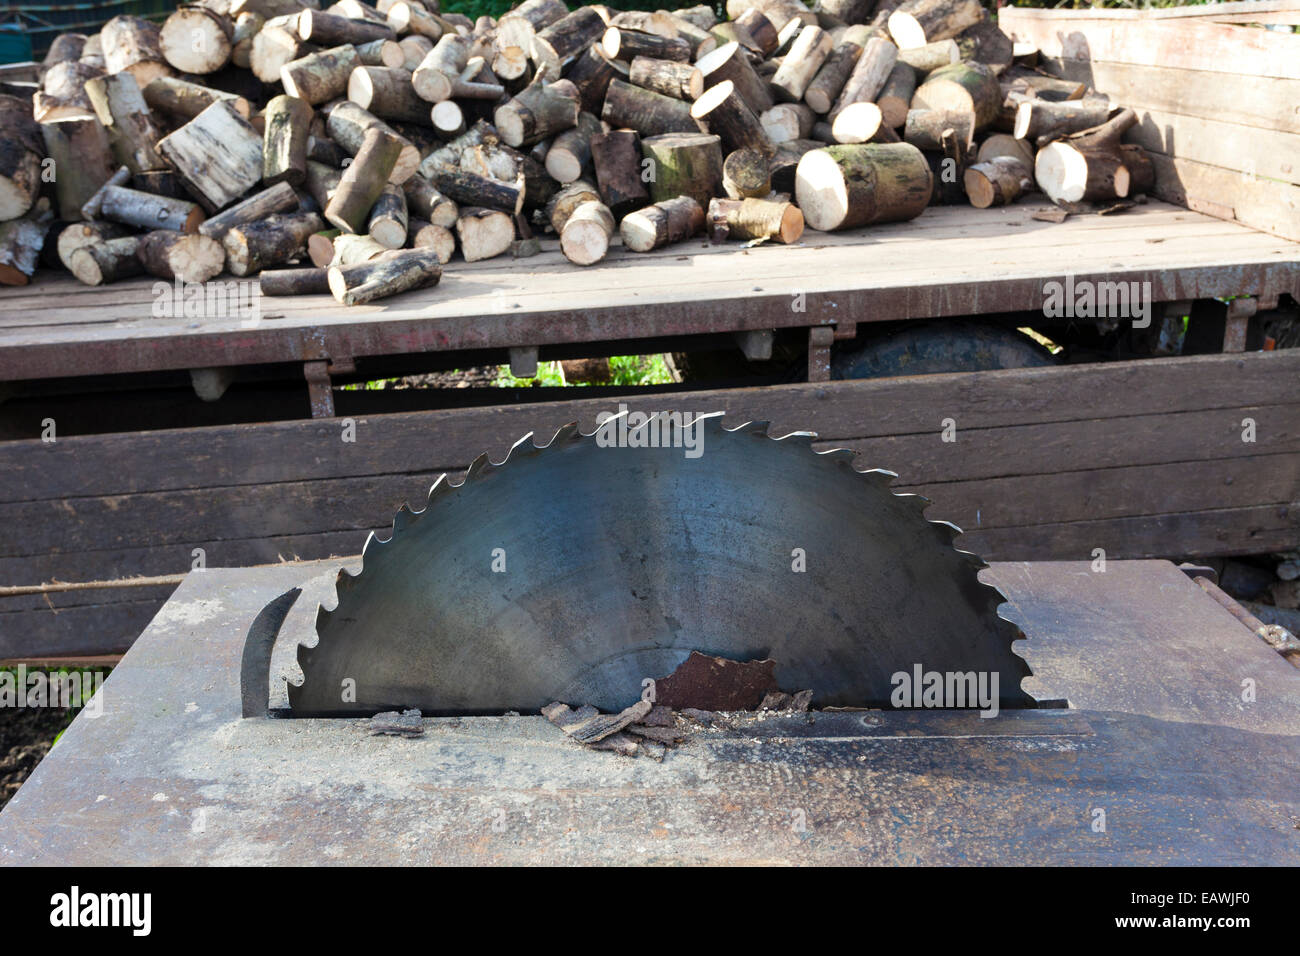 Circular saw bench and cut logs Stock Photo